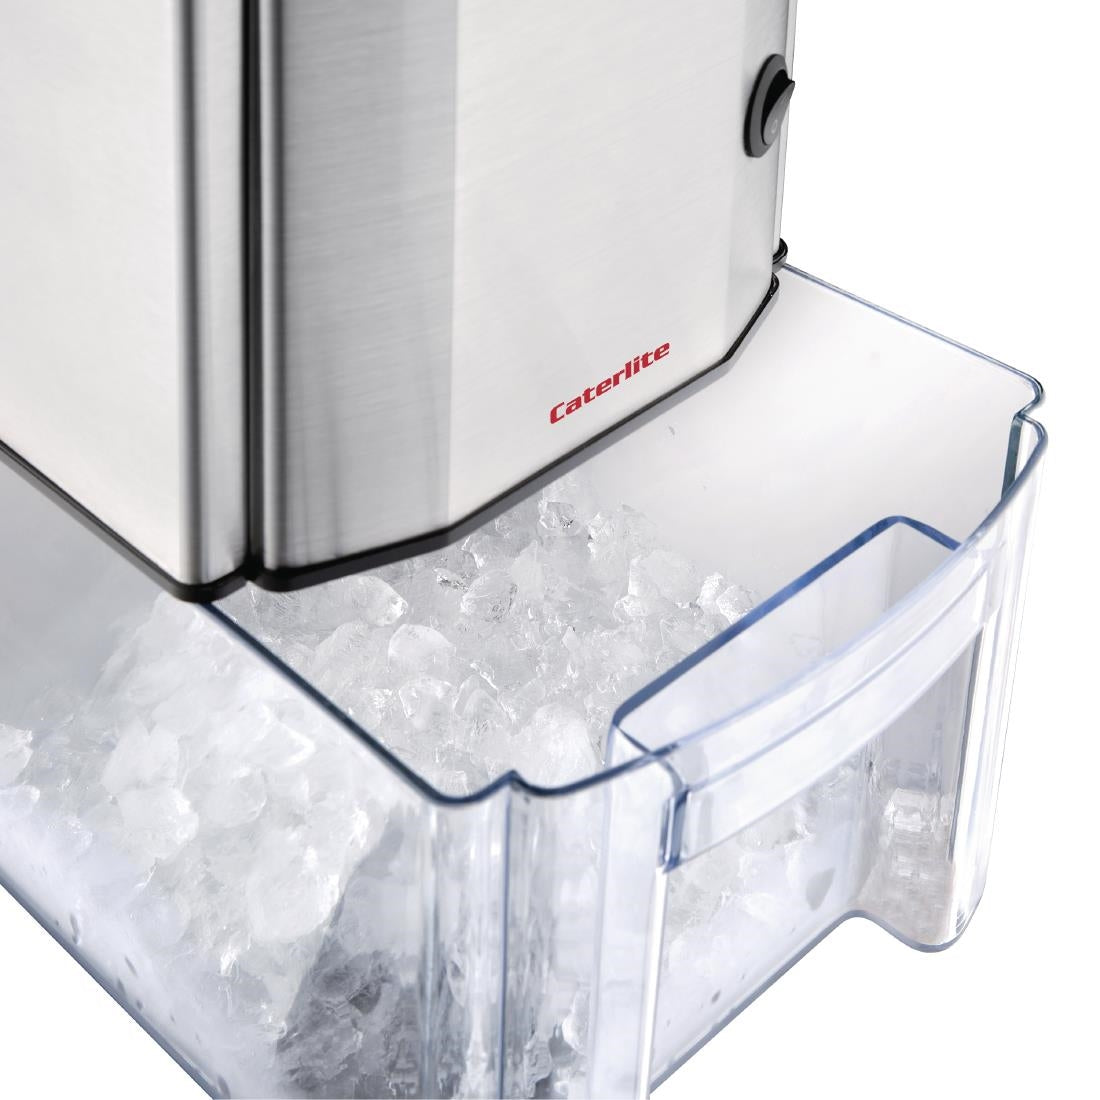 CT057 Caterlite Ice Crusher JD Catering Equipment Solutions Ltd